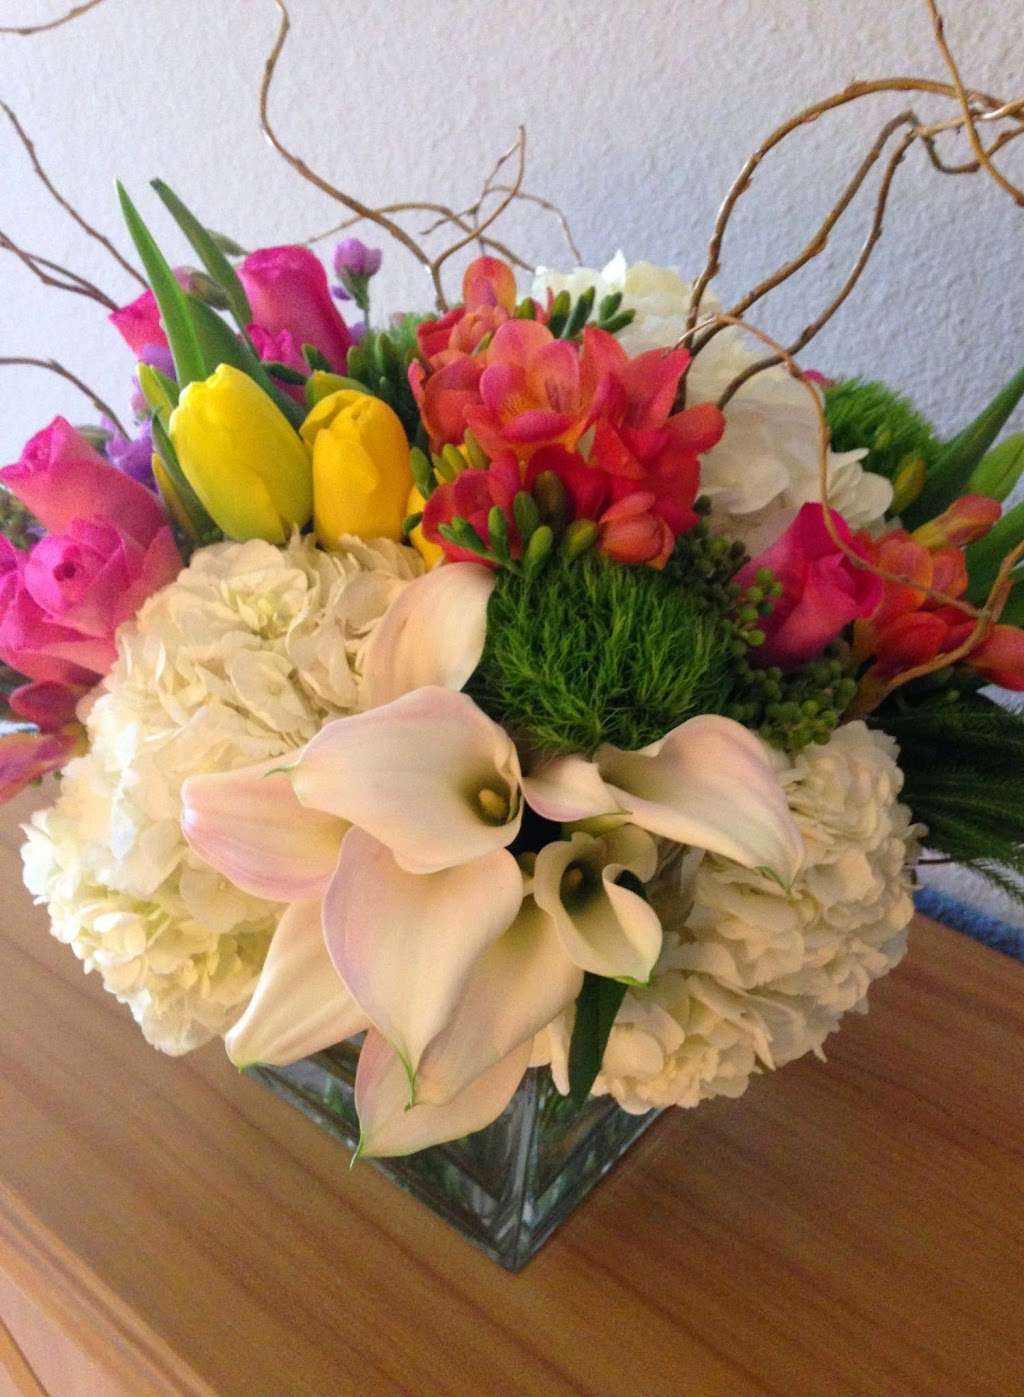 CC fine florals | 8 Whatney, Irvine, CA 92618, USA | Phone: (949) 702-2266